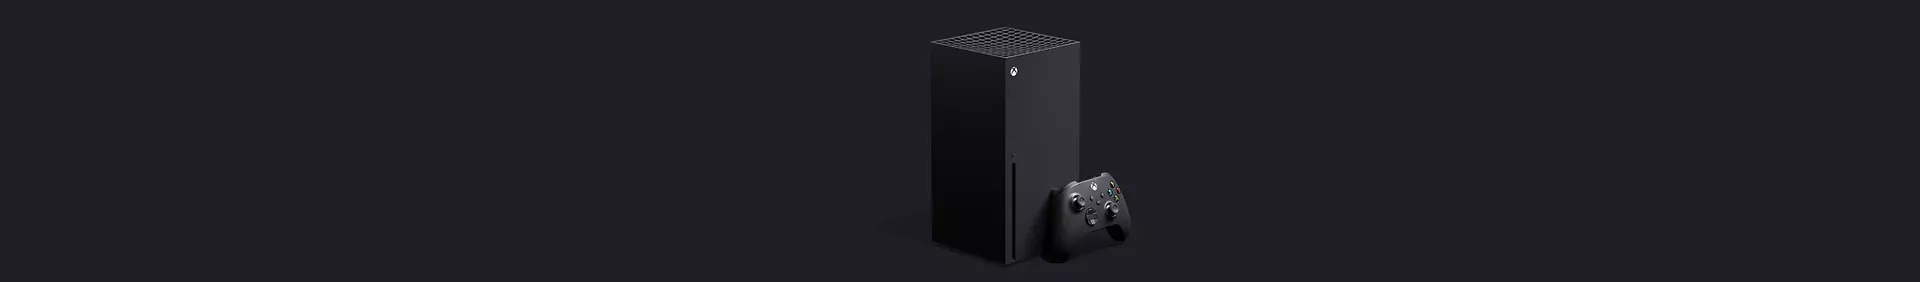 Xbox Series X - Consolas